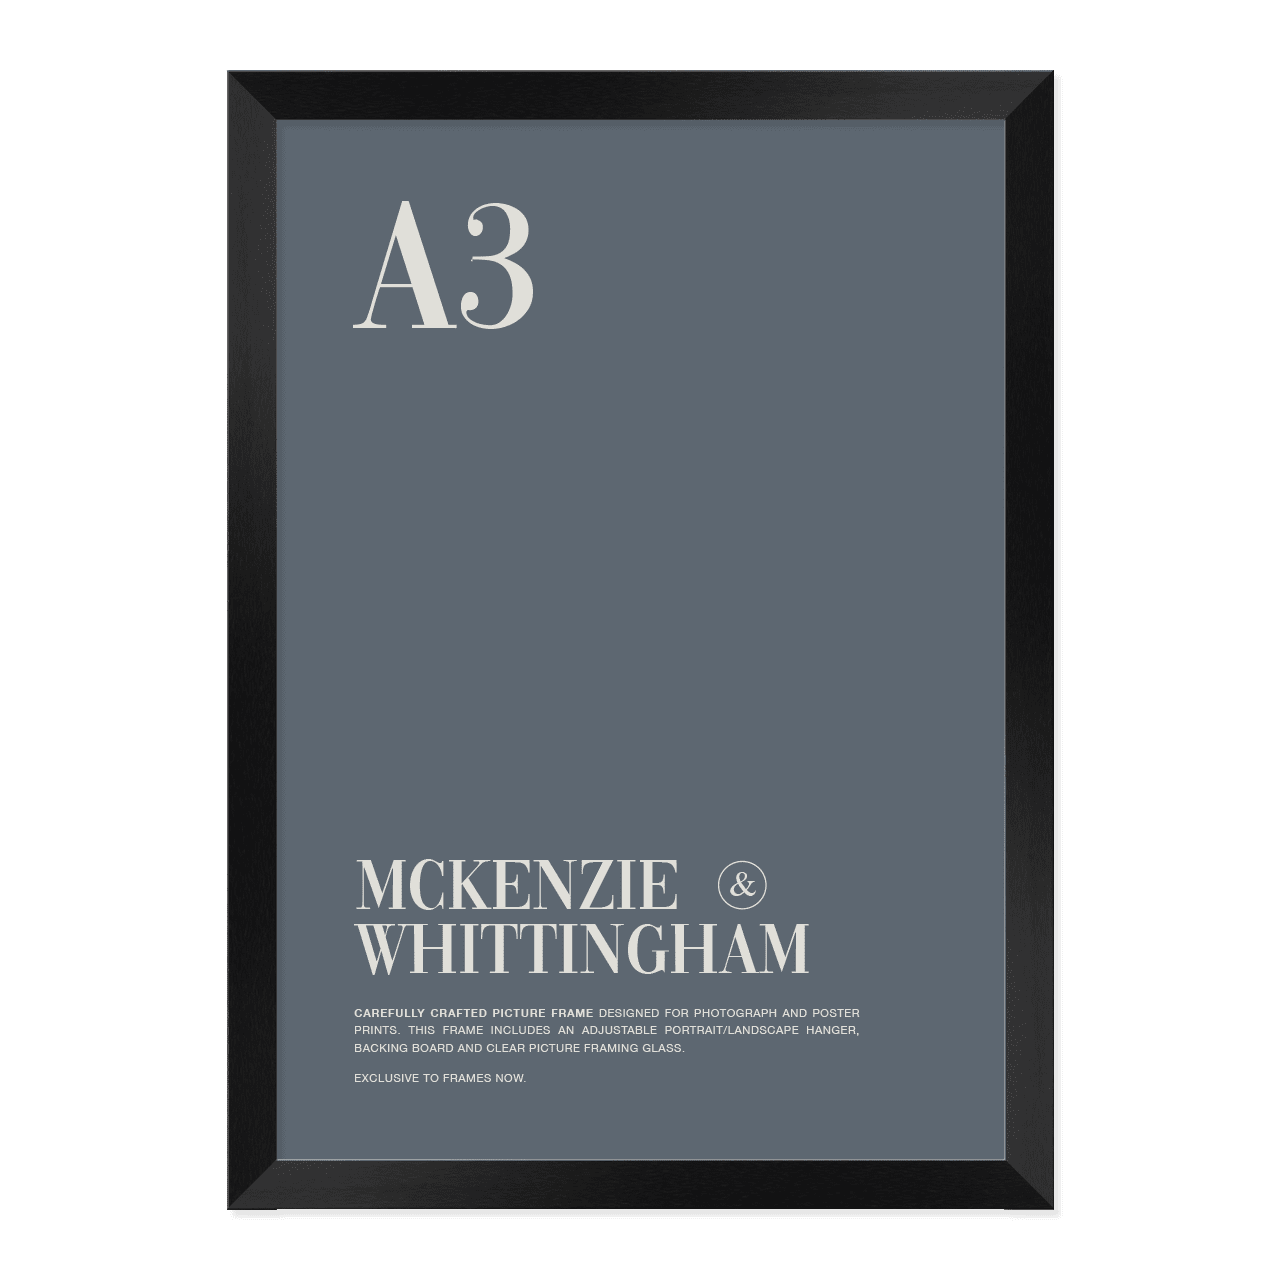 McKenzie & Whittingham Matte Black Picture Frame for A3 Artwork